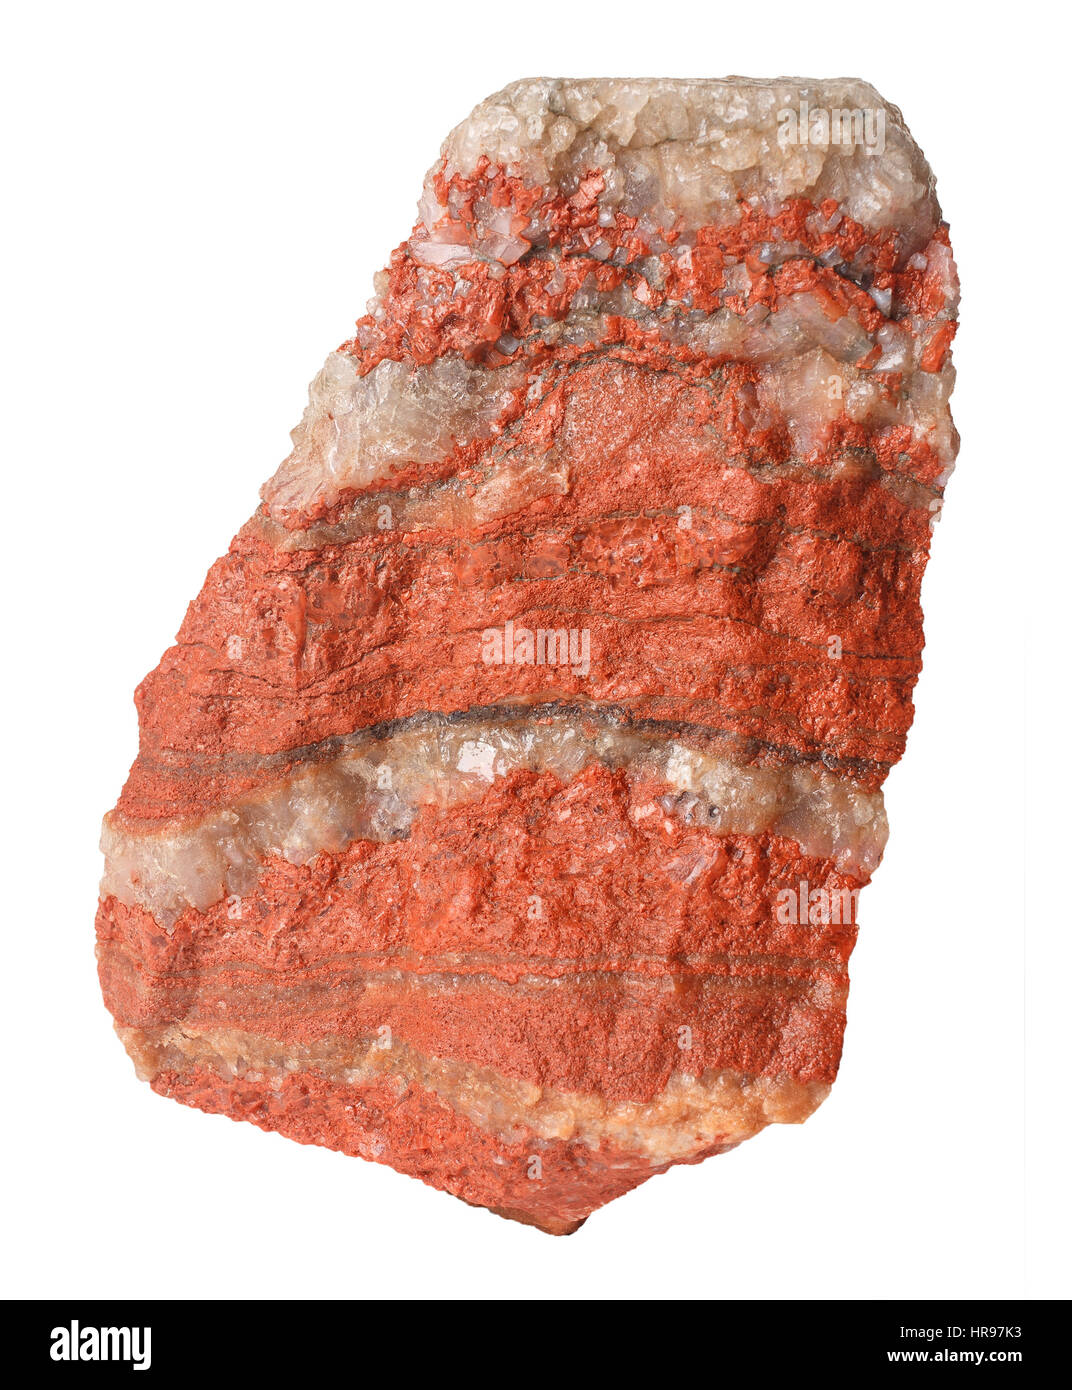 Stone red potassium salt with sodium salt layers isolated on white background. Stock Photo